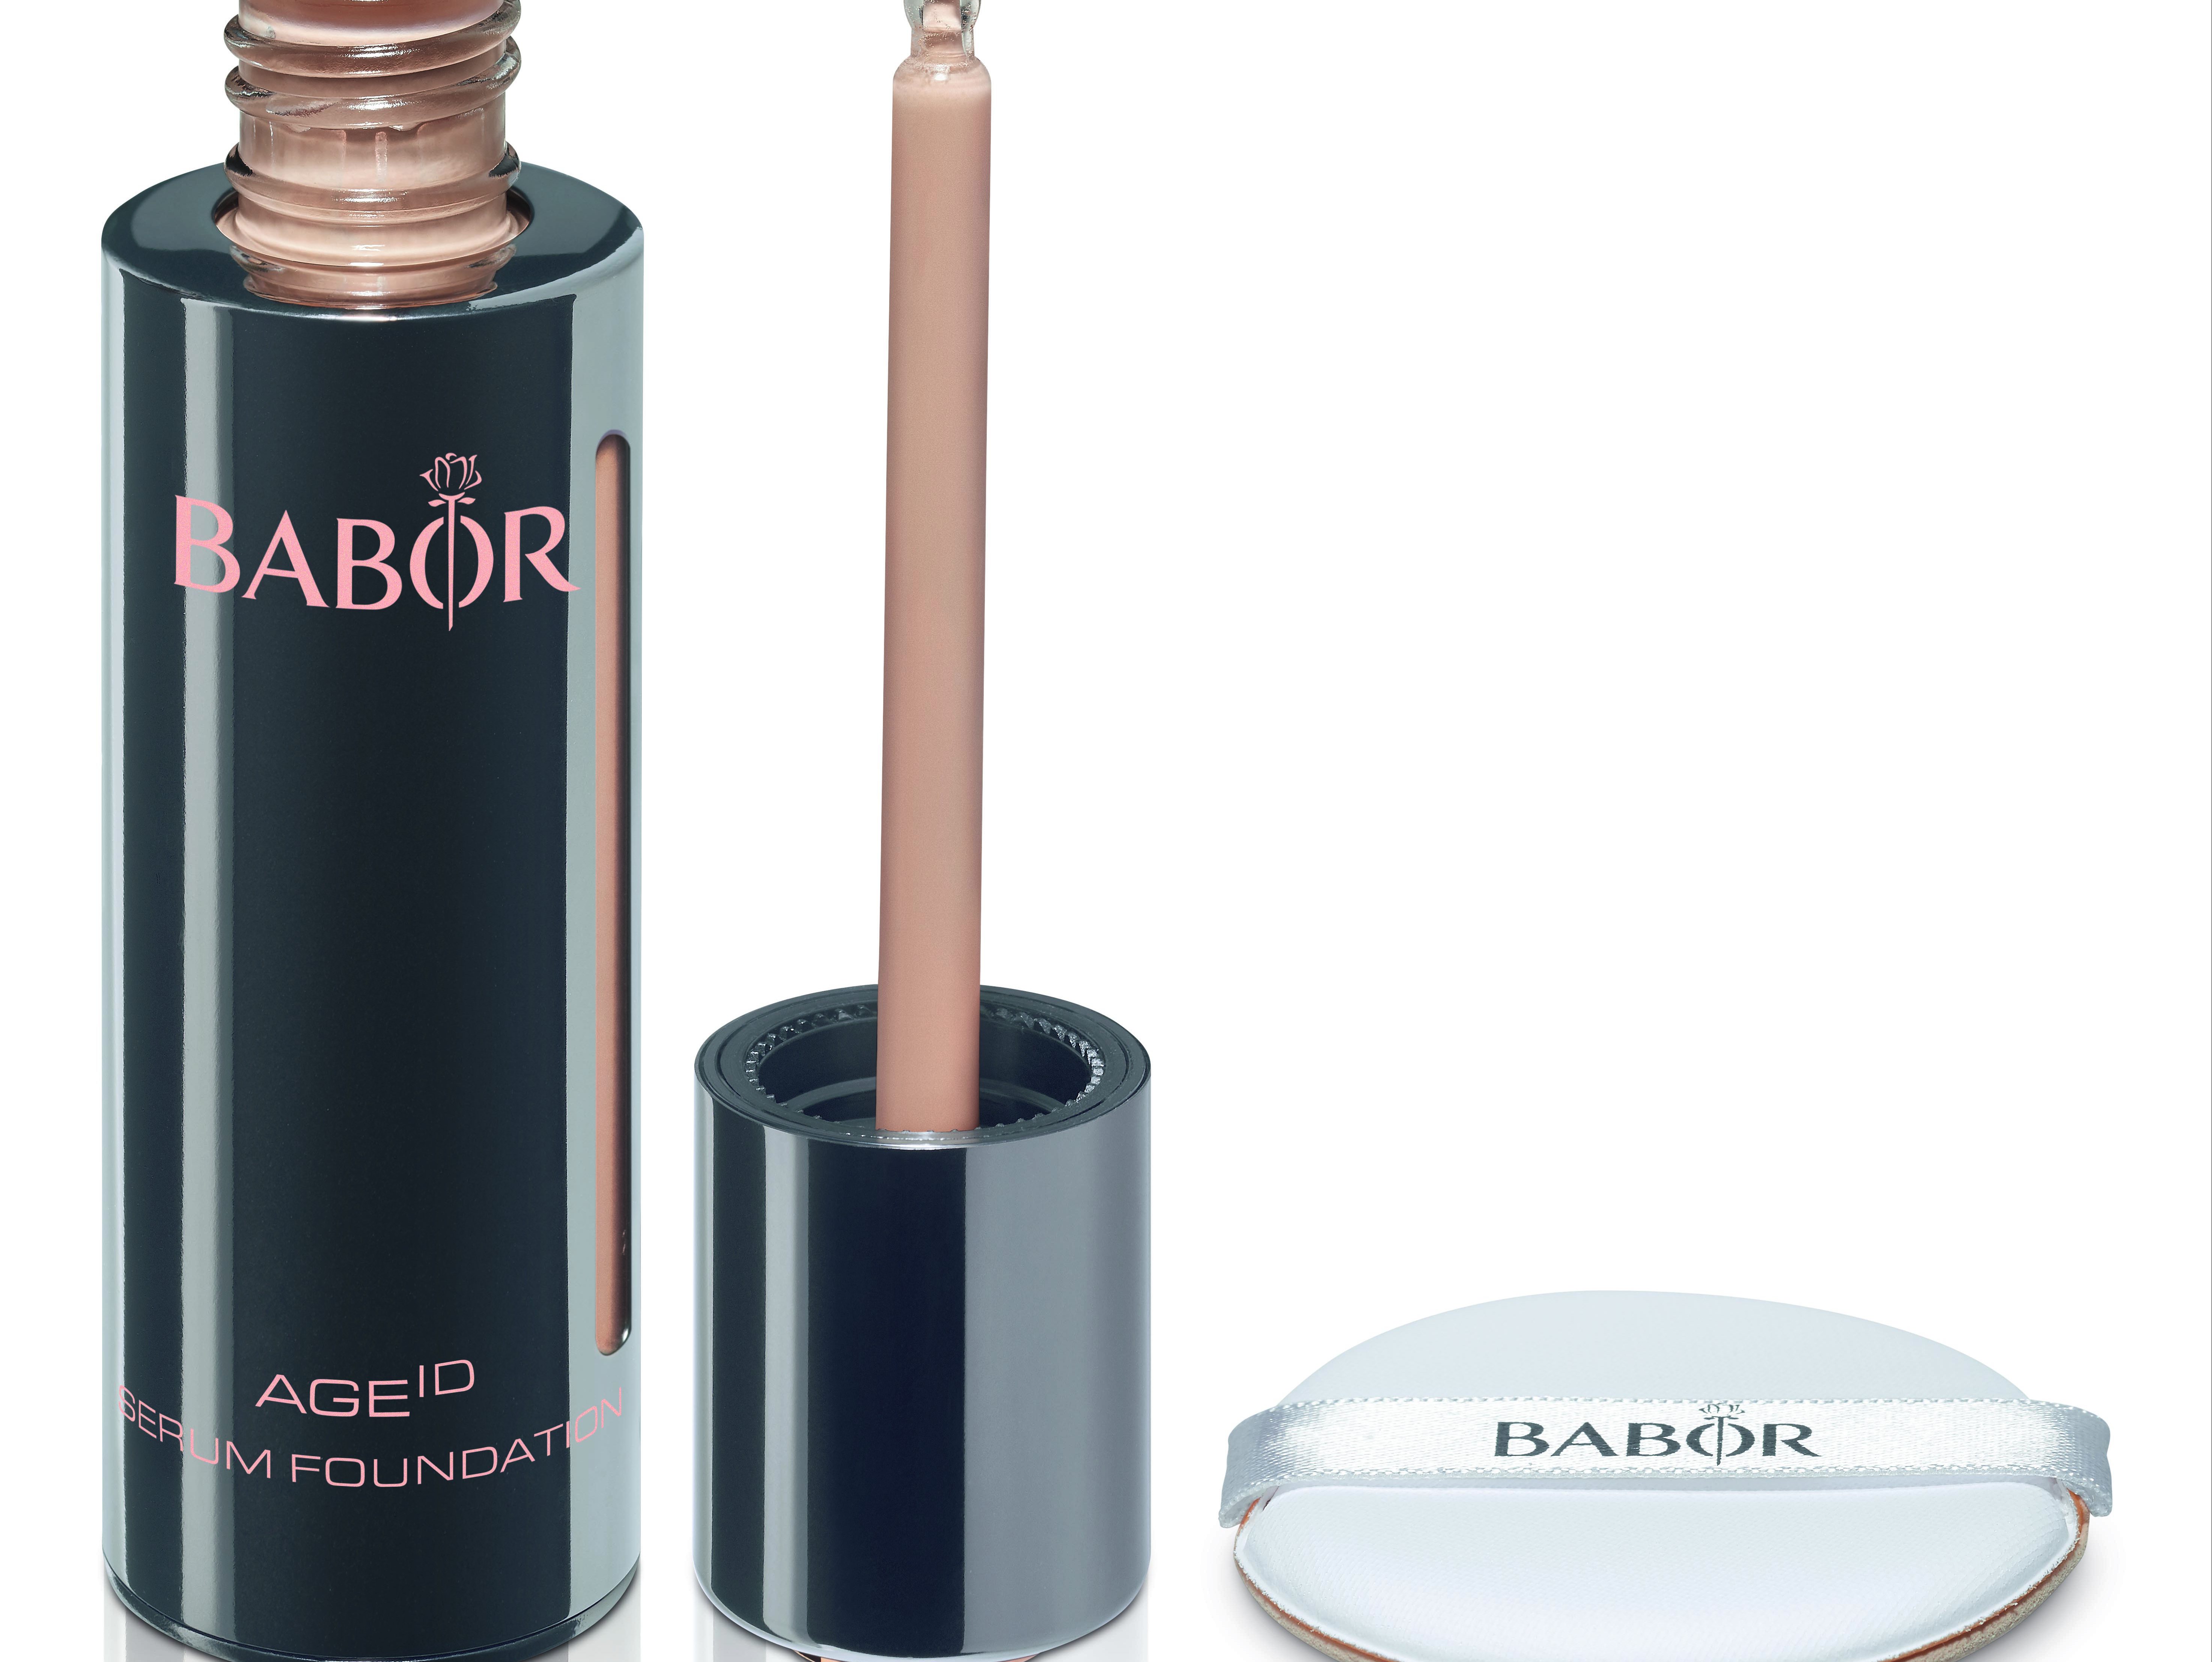 BABOR launches makeup range